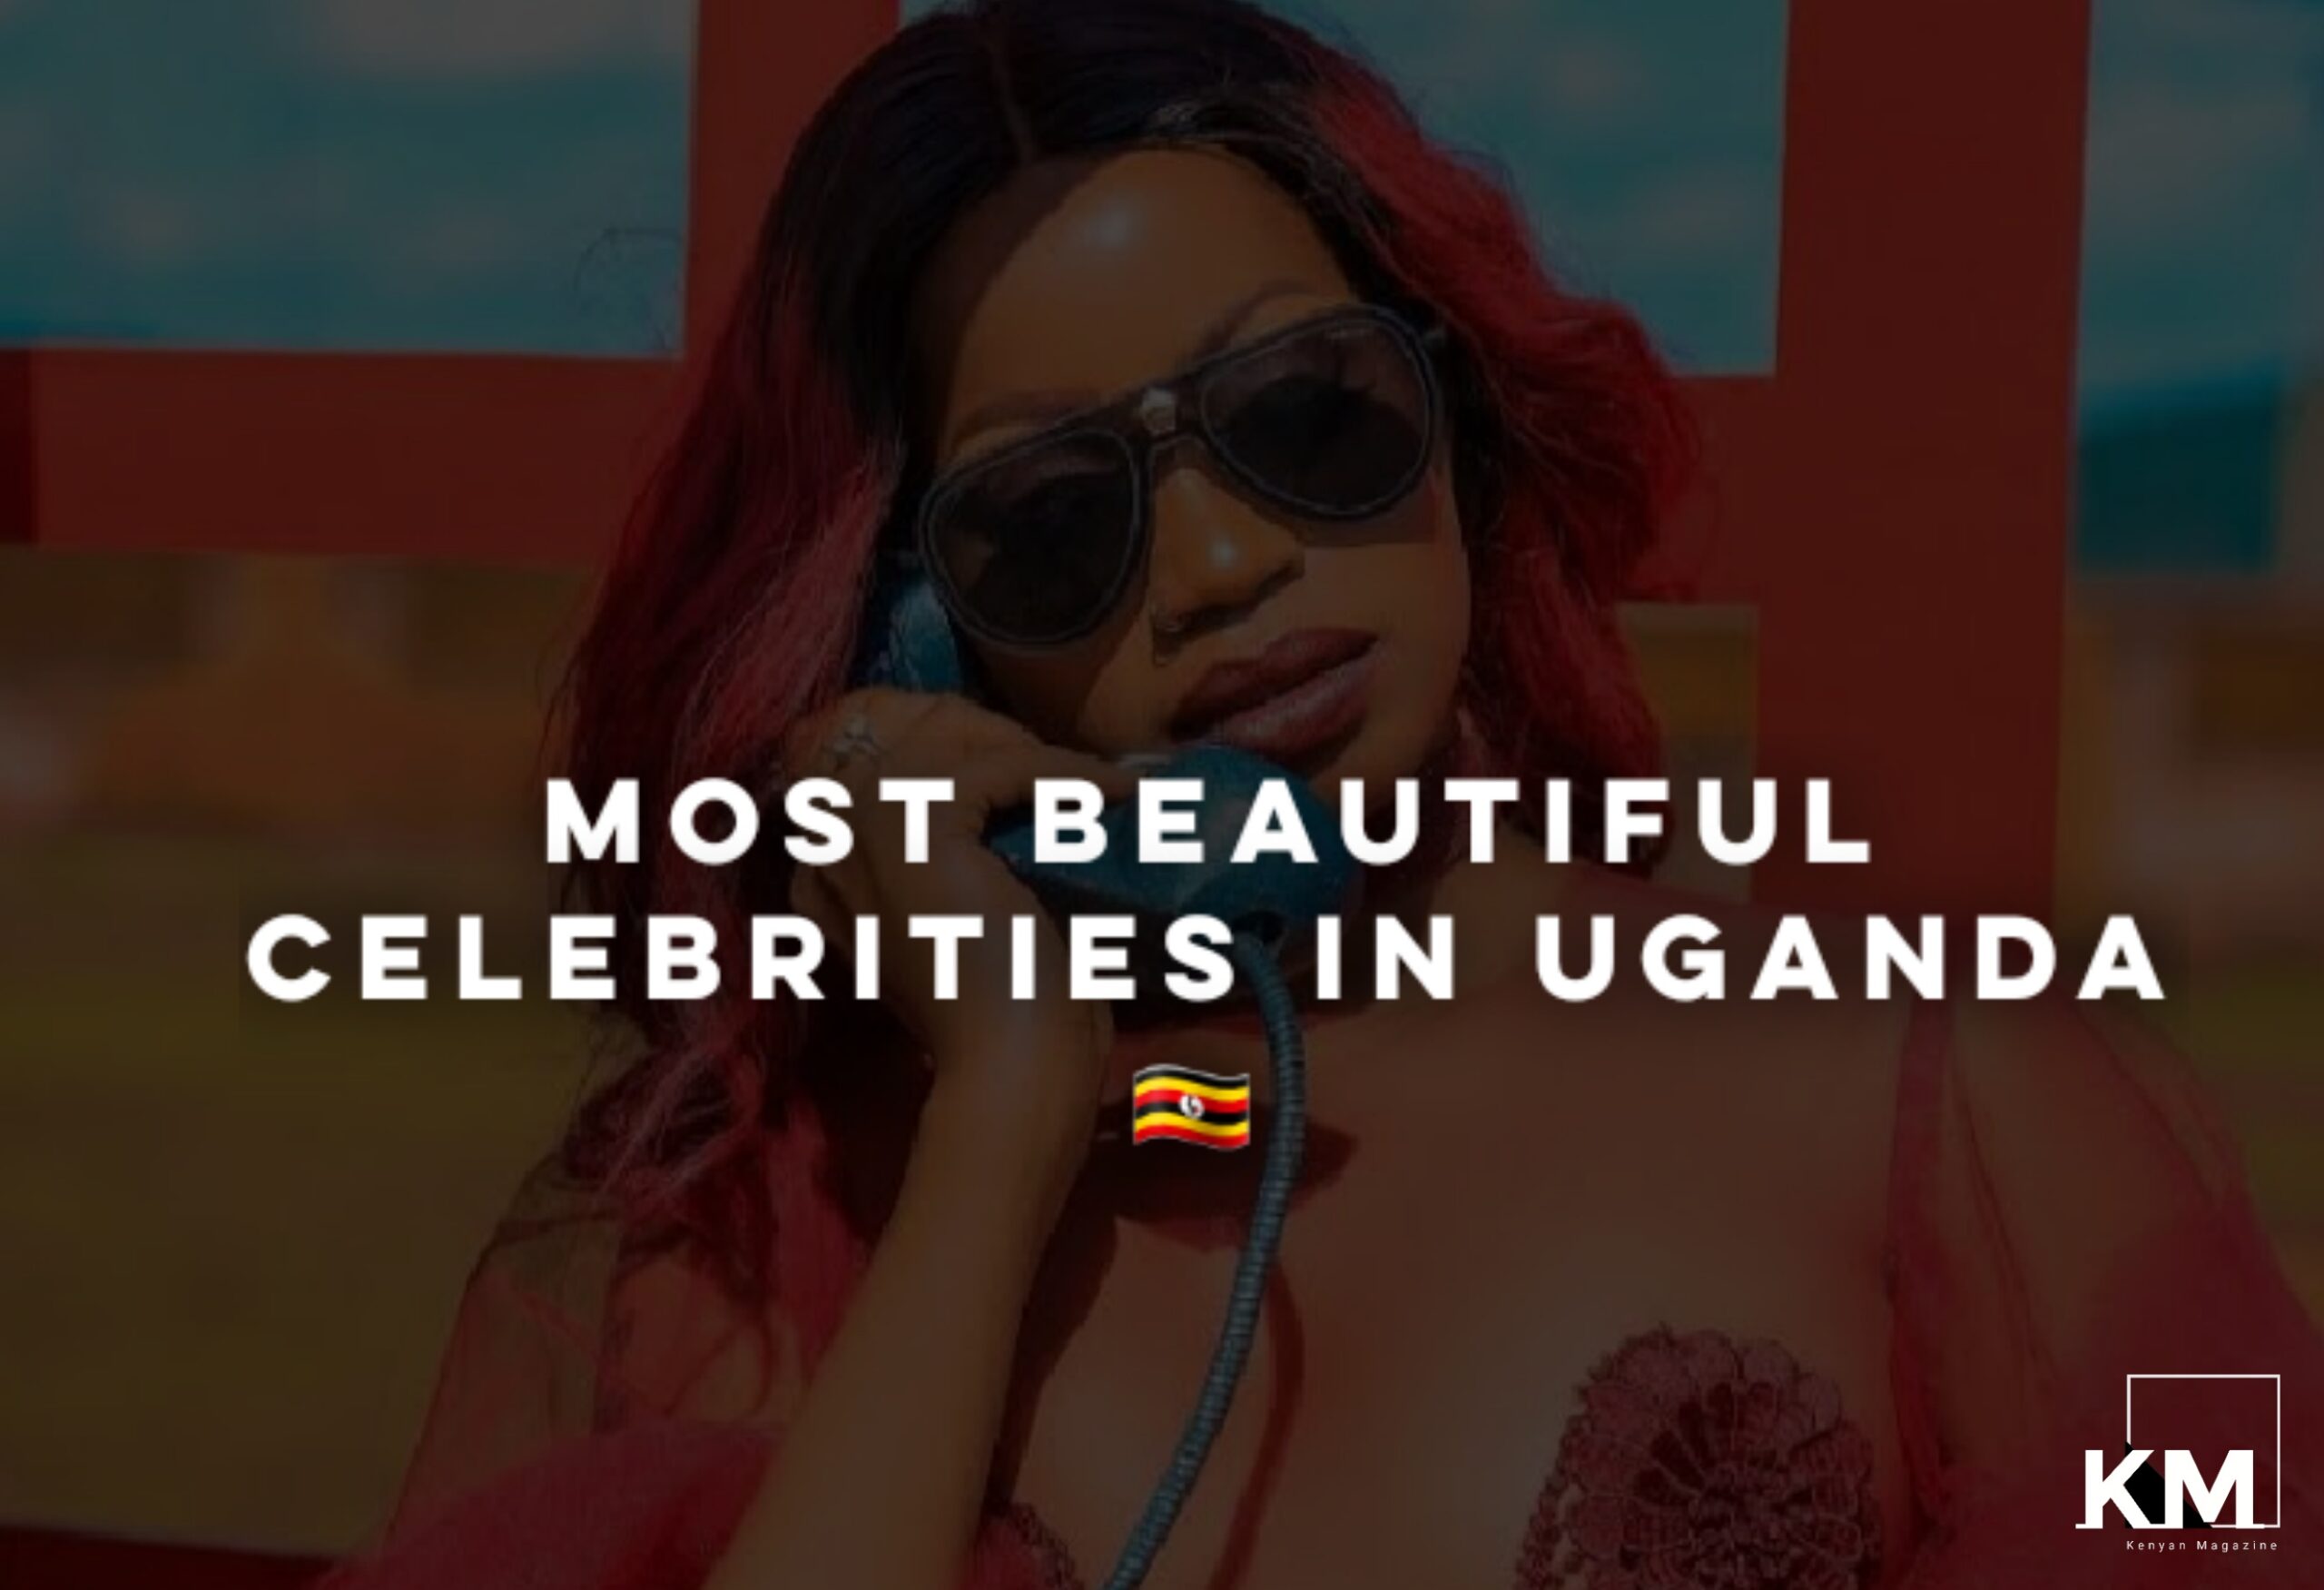 Most beautiful celebrities in uganda